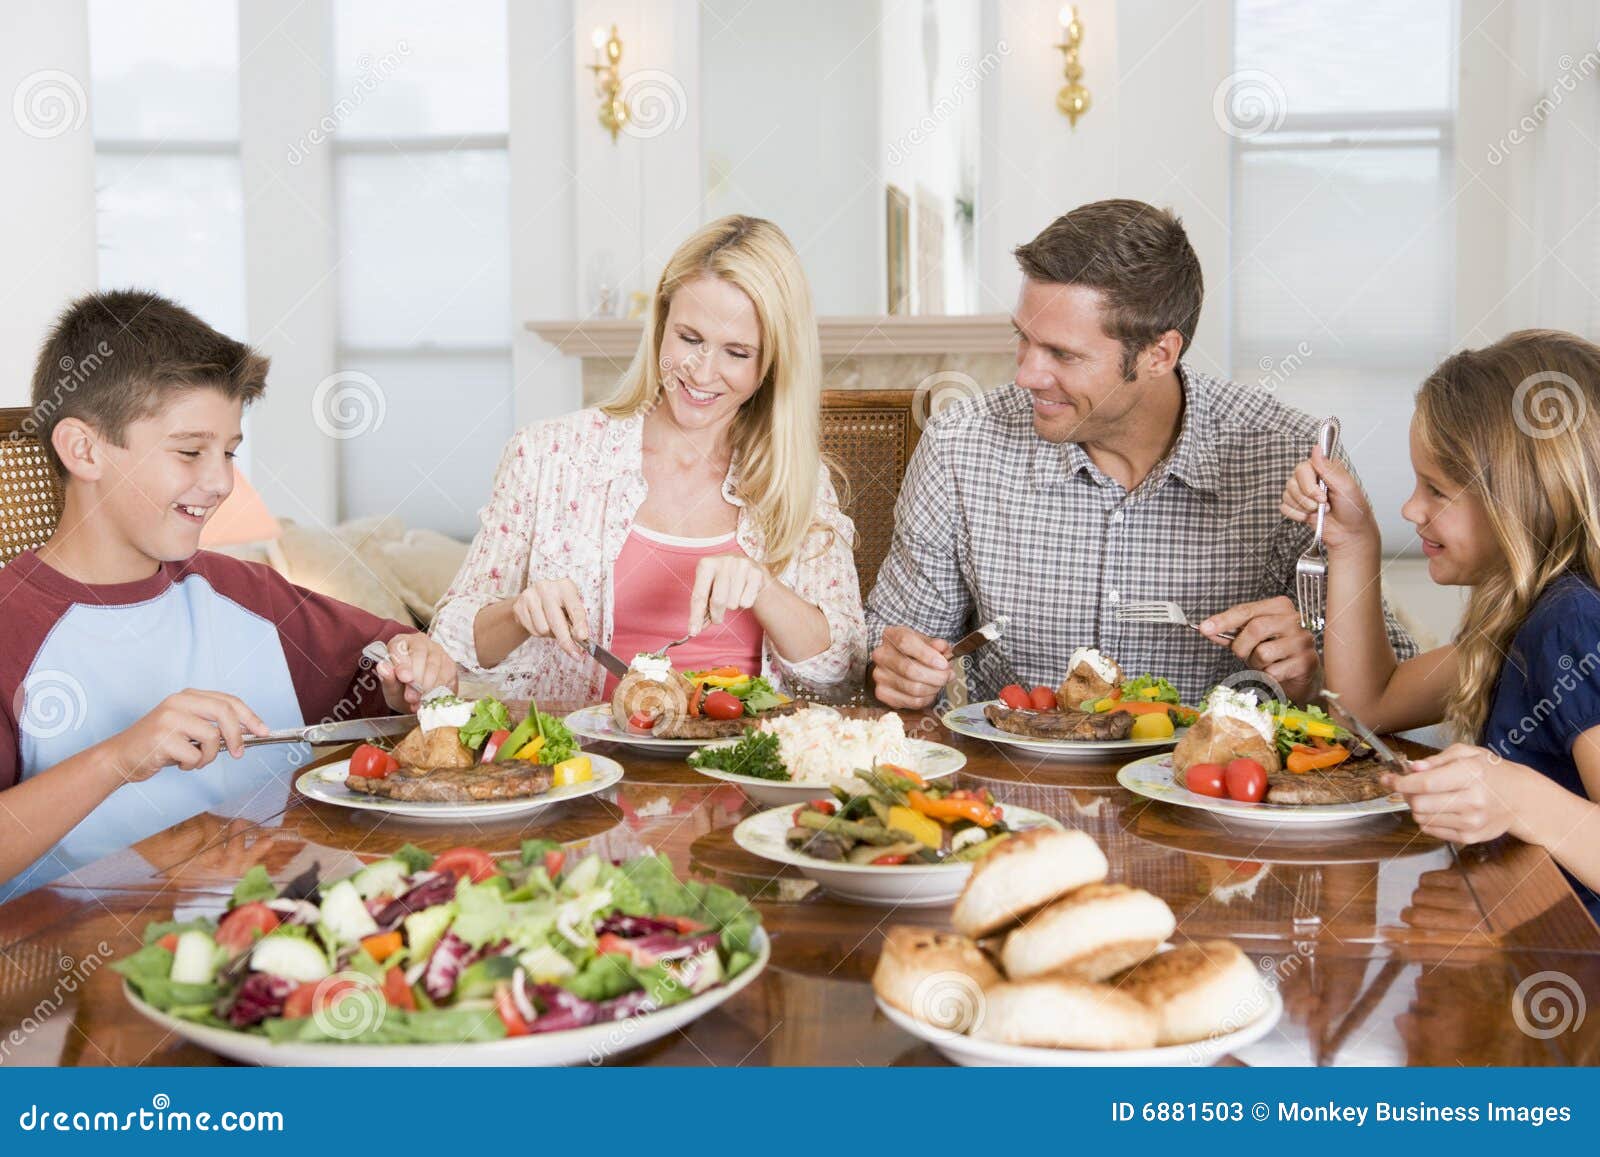 family enjoying meal, mealtime together